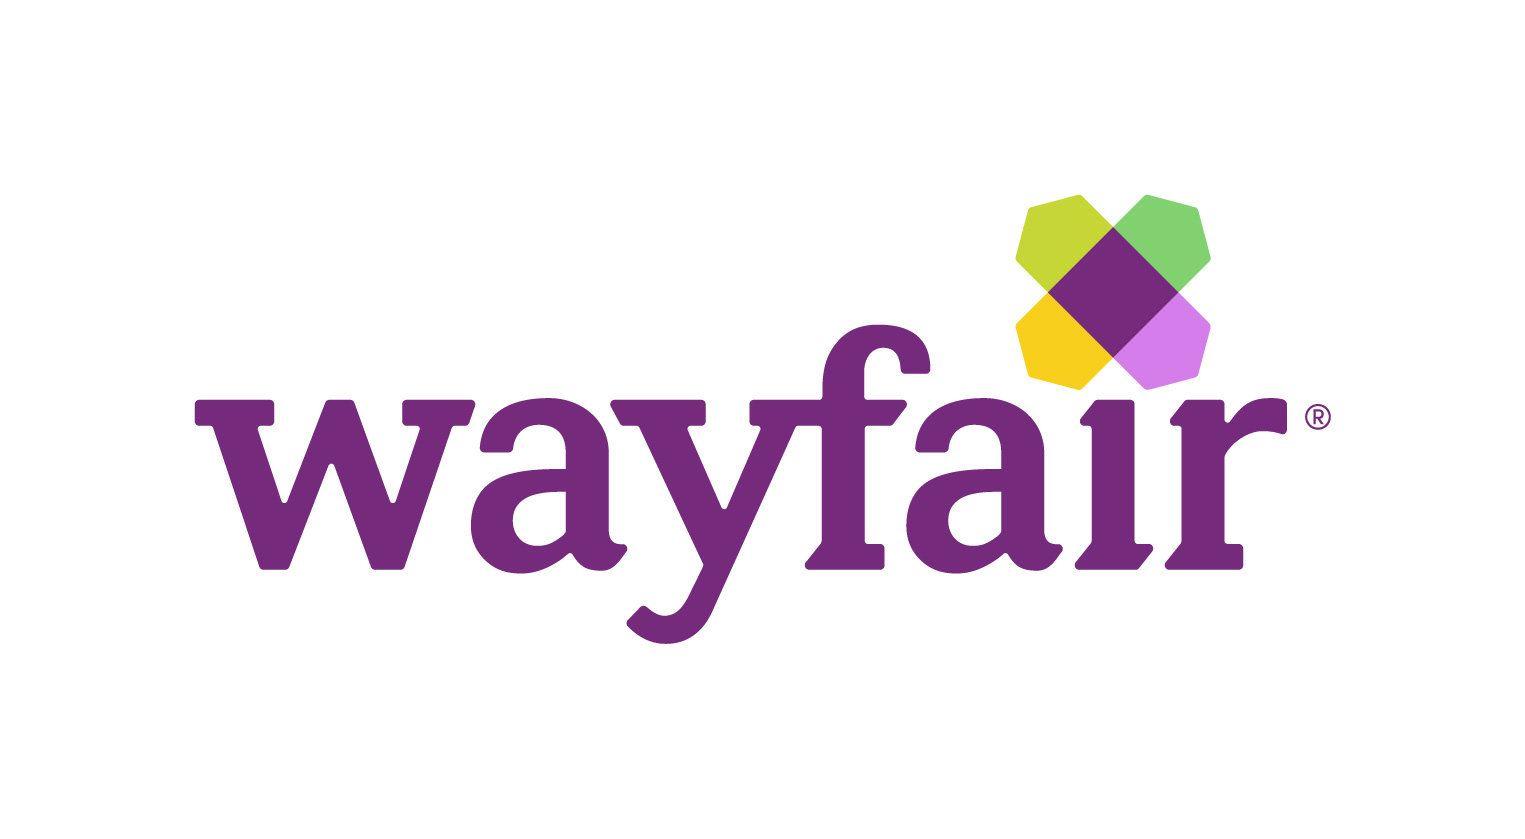 Wayfair.com Logo - About